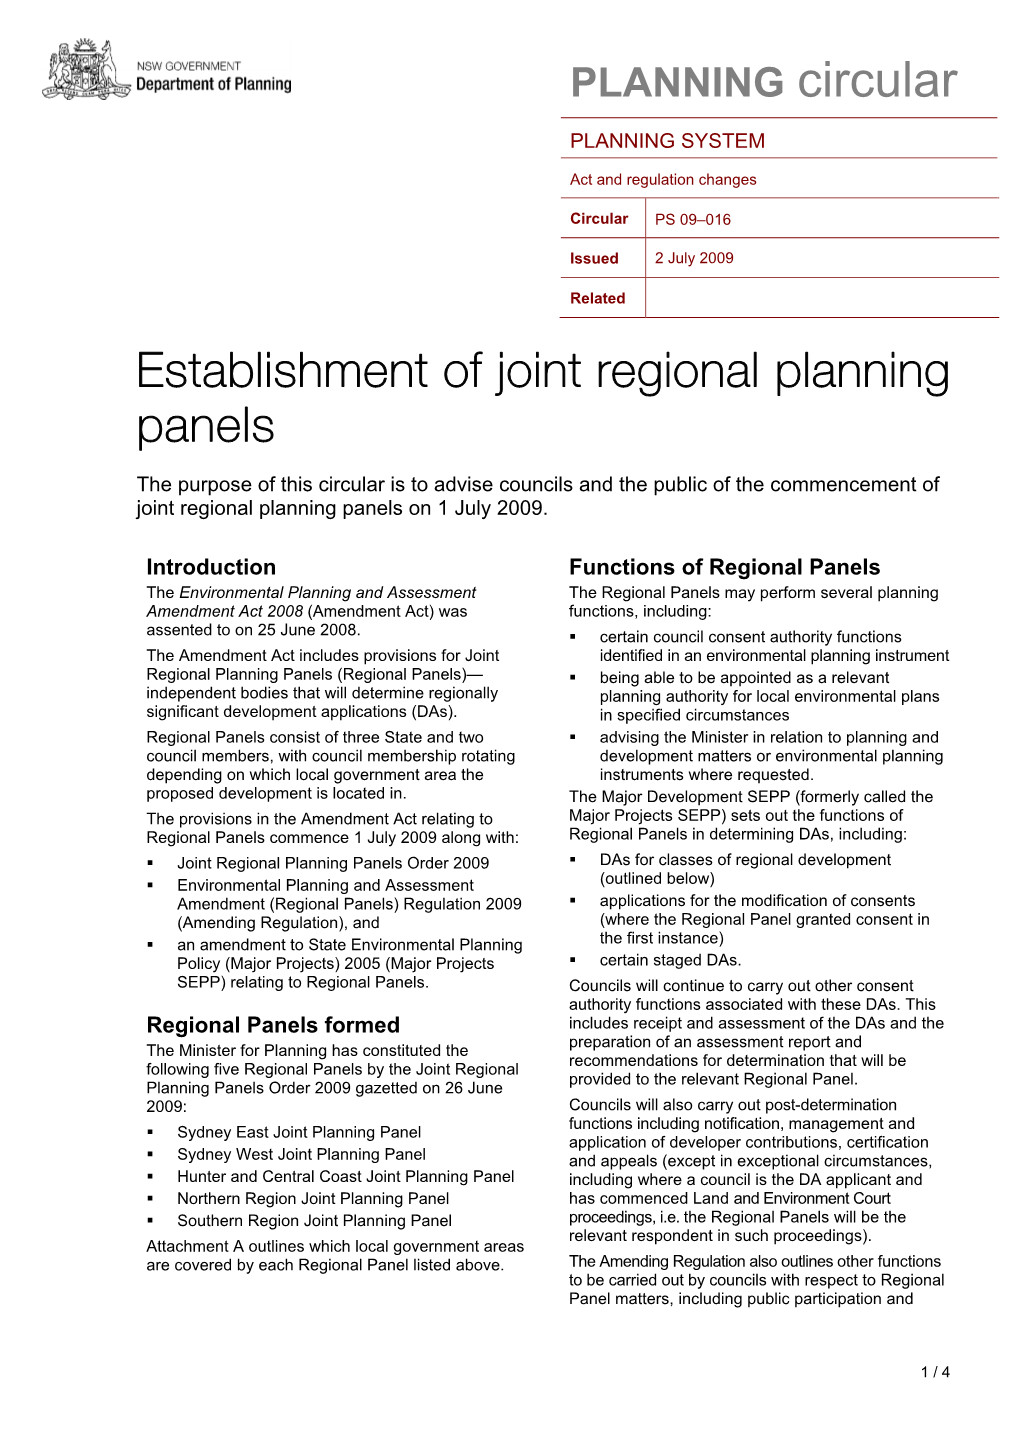 Establishment of Joint Regional Planning Panels